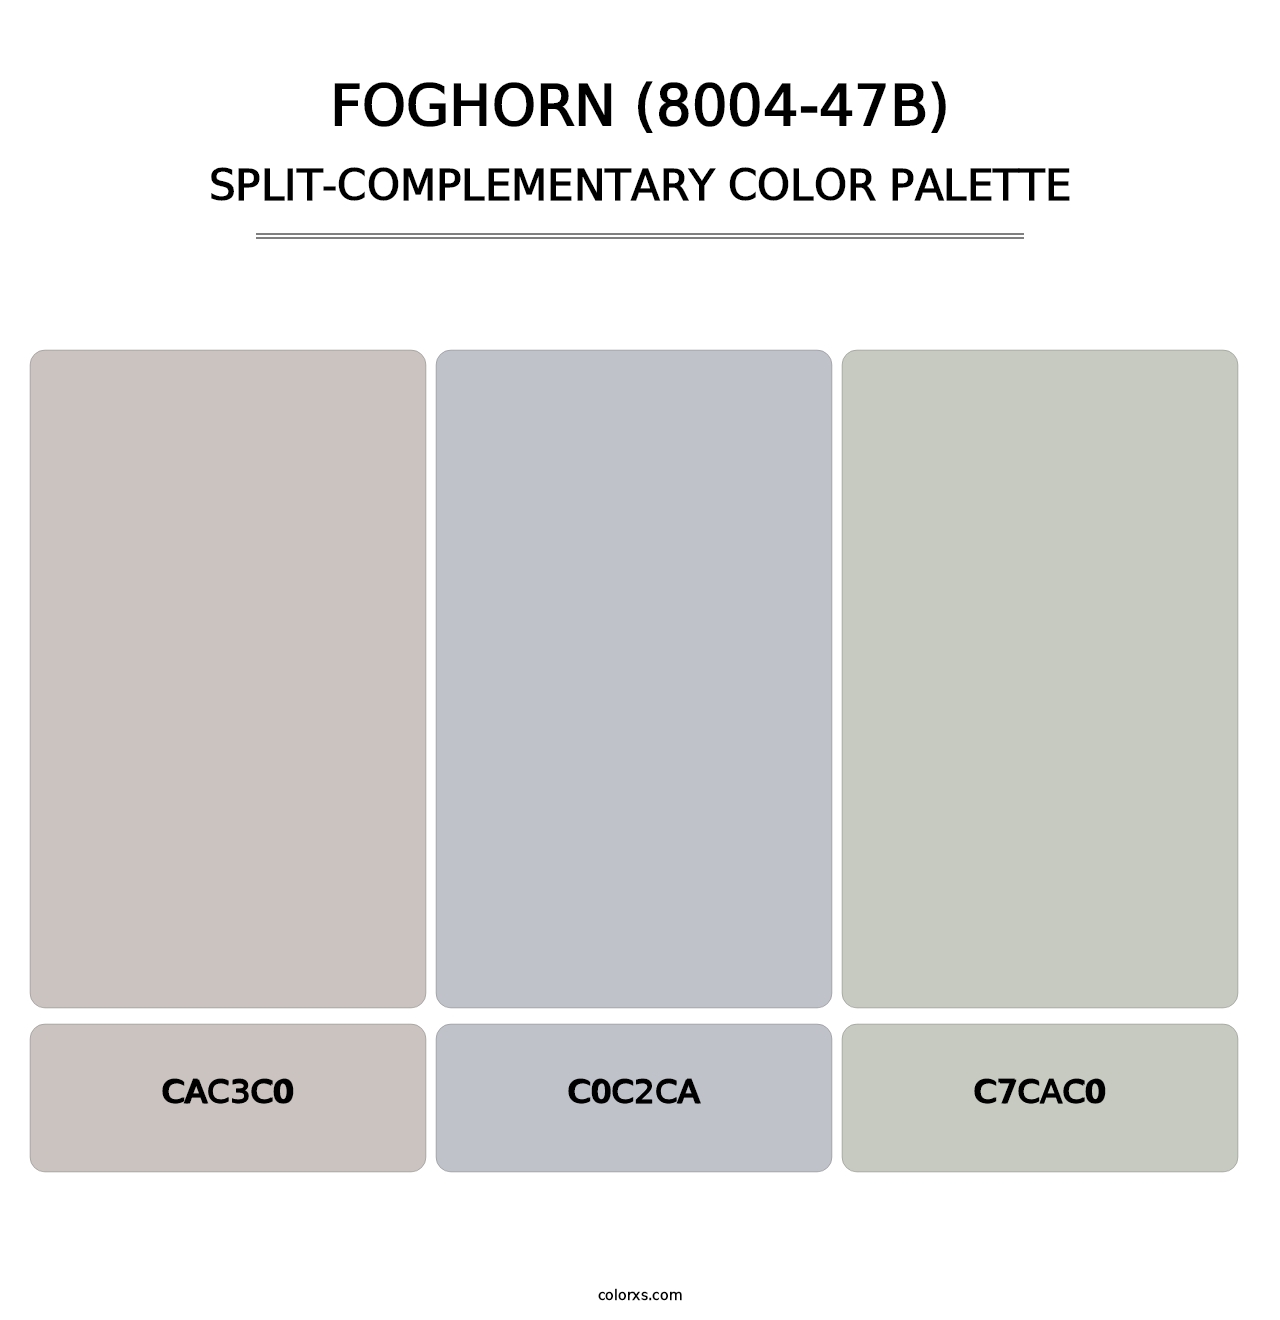 Foghorn (8004-47B) - Split-Complementary Color Palette